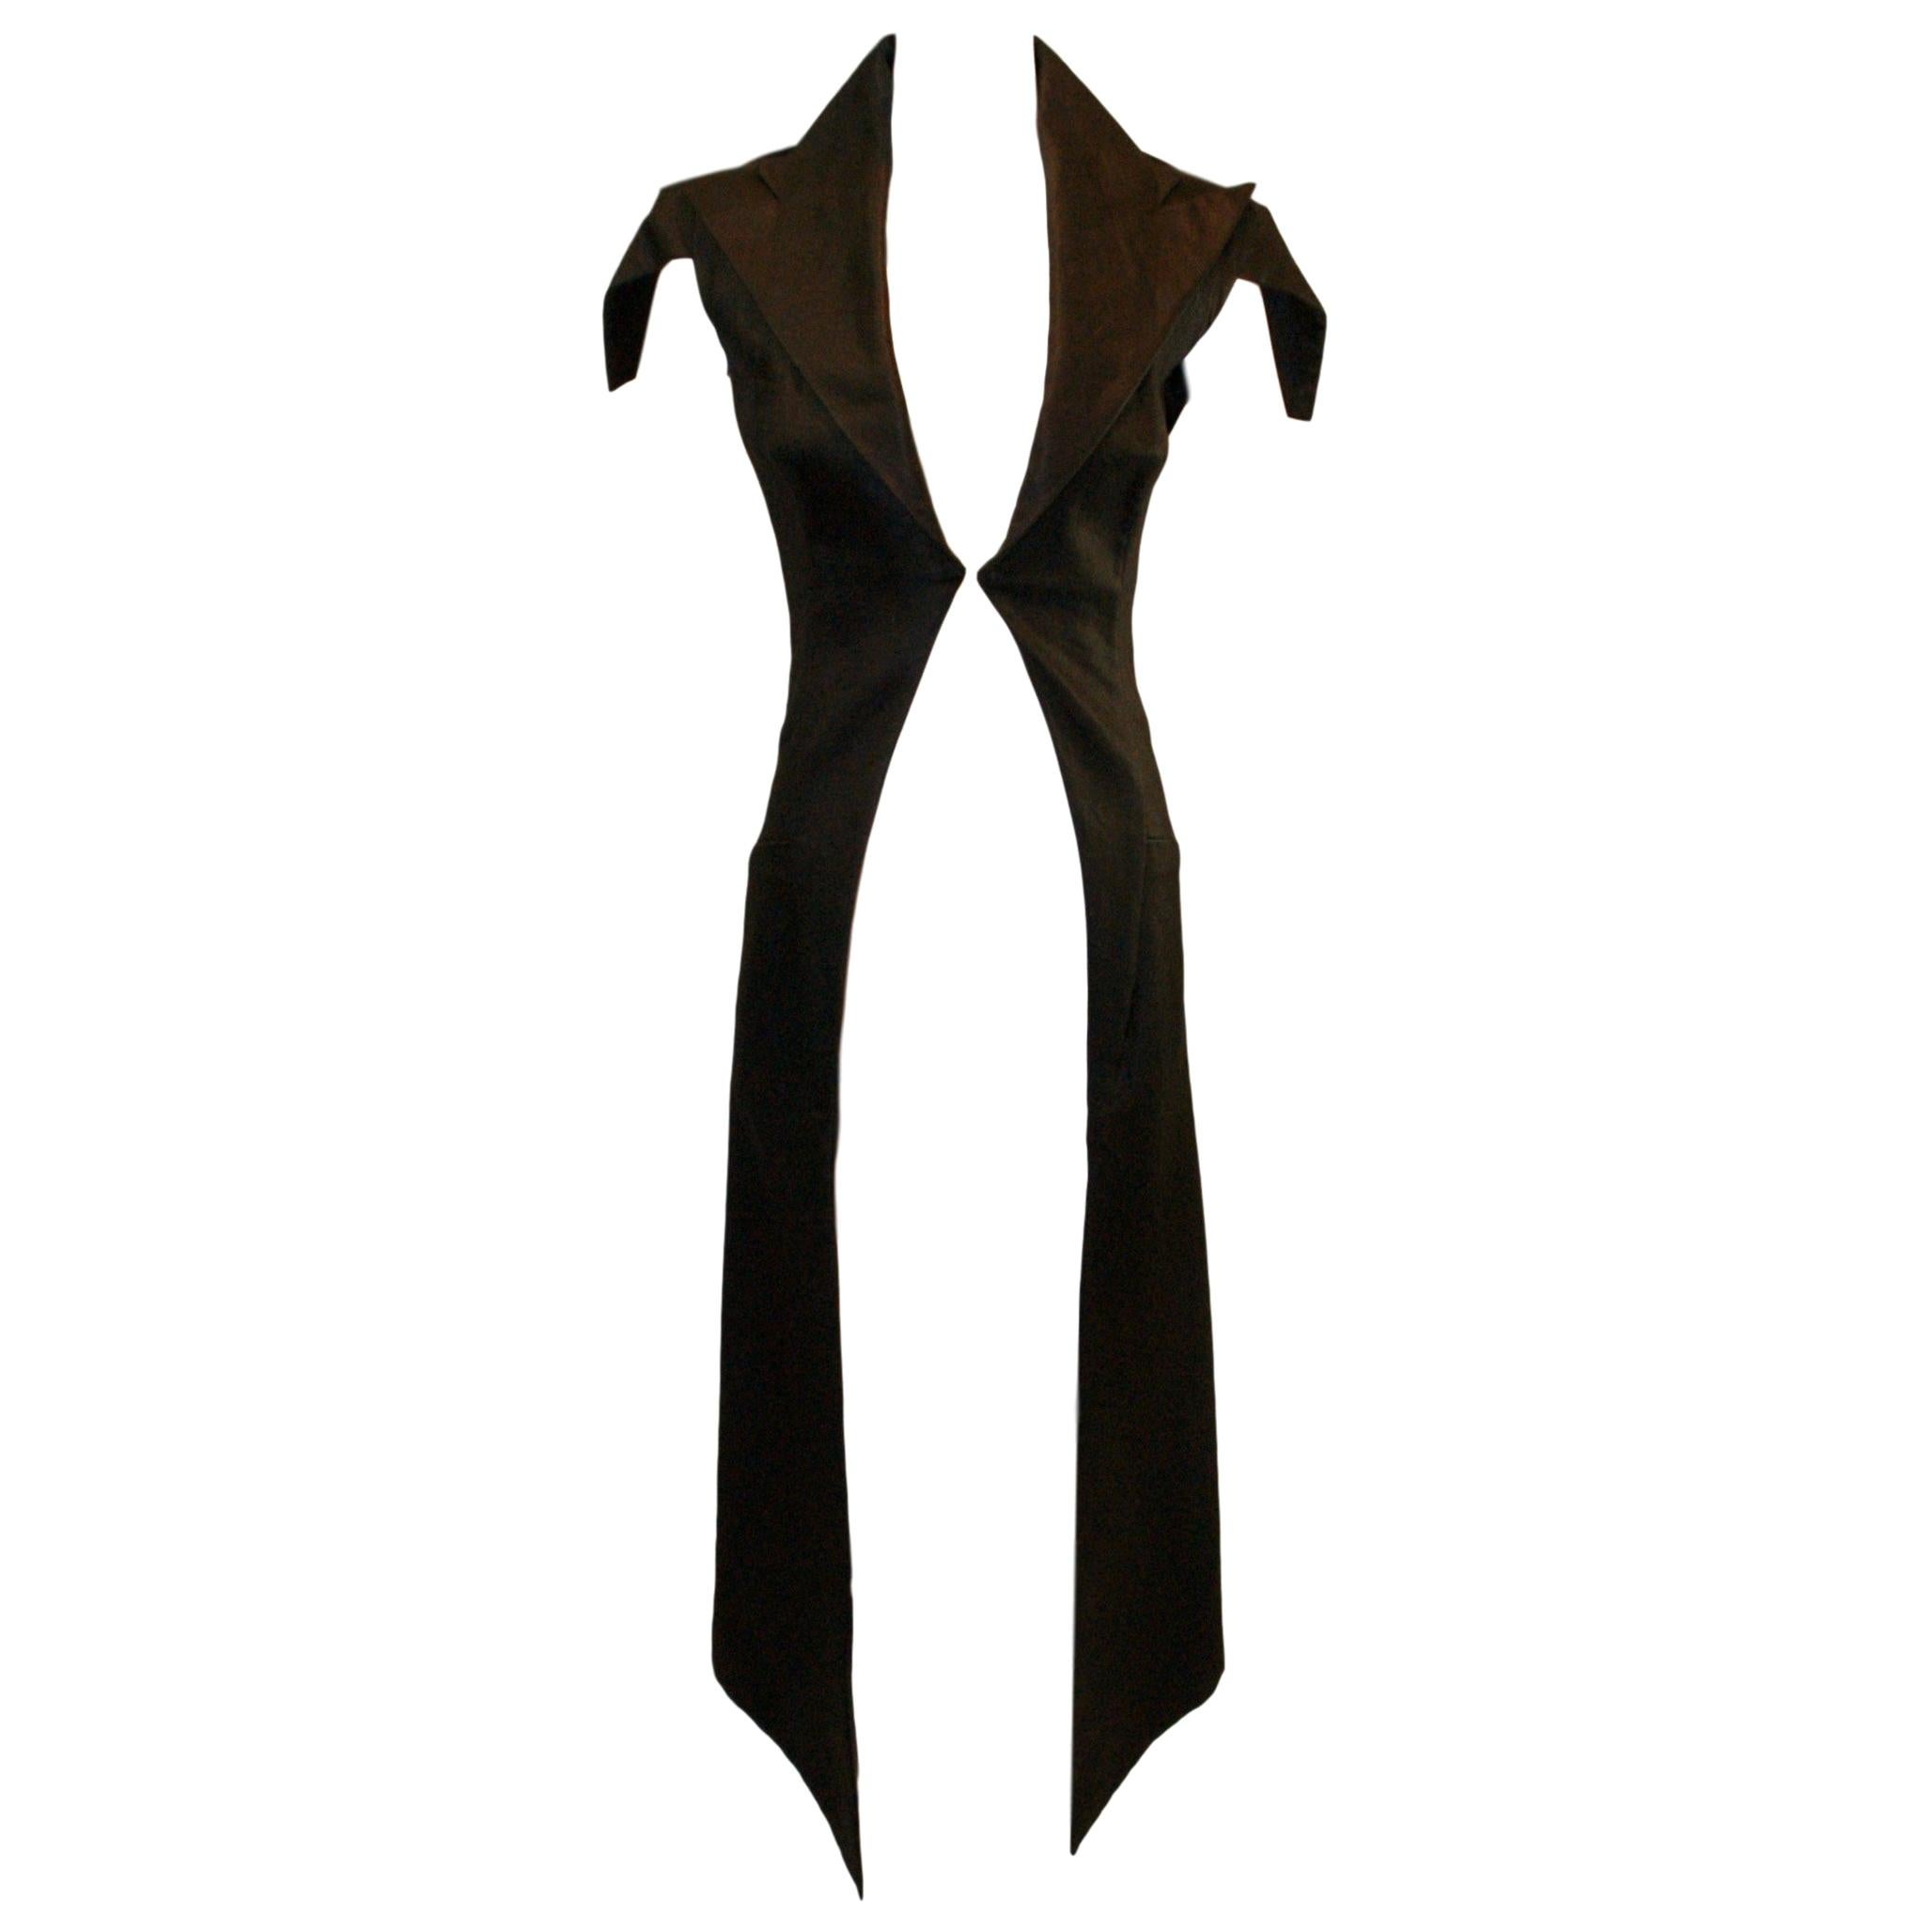 Alexander McQueen Museum Savage Beauty Untitled S/S 1999 Resin Black Coat Dress